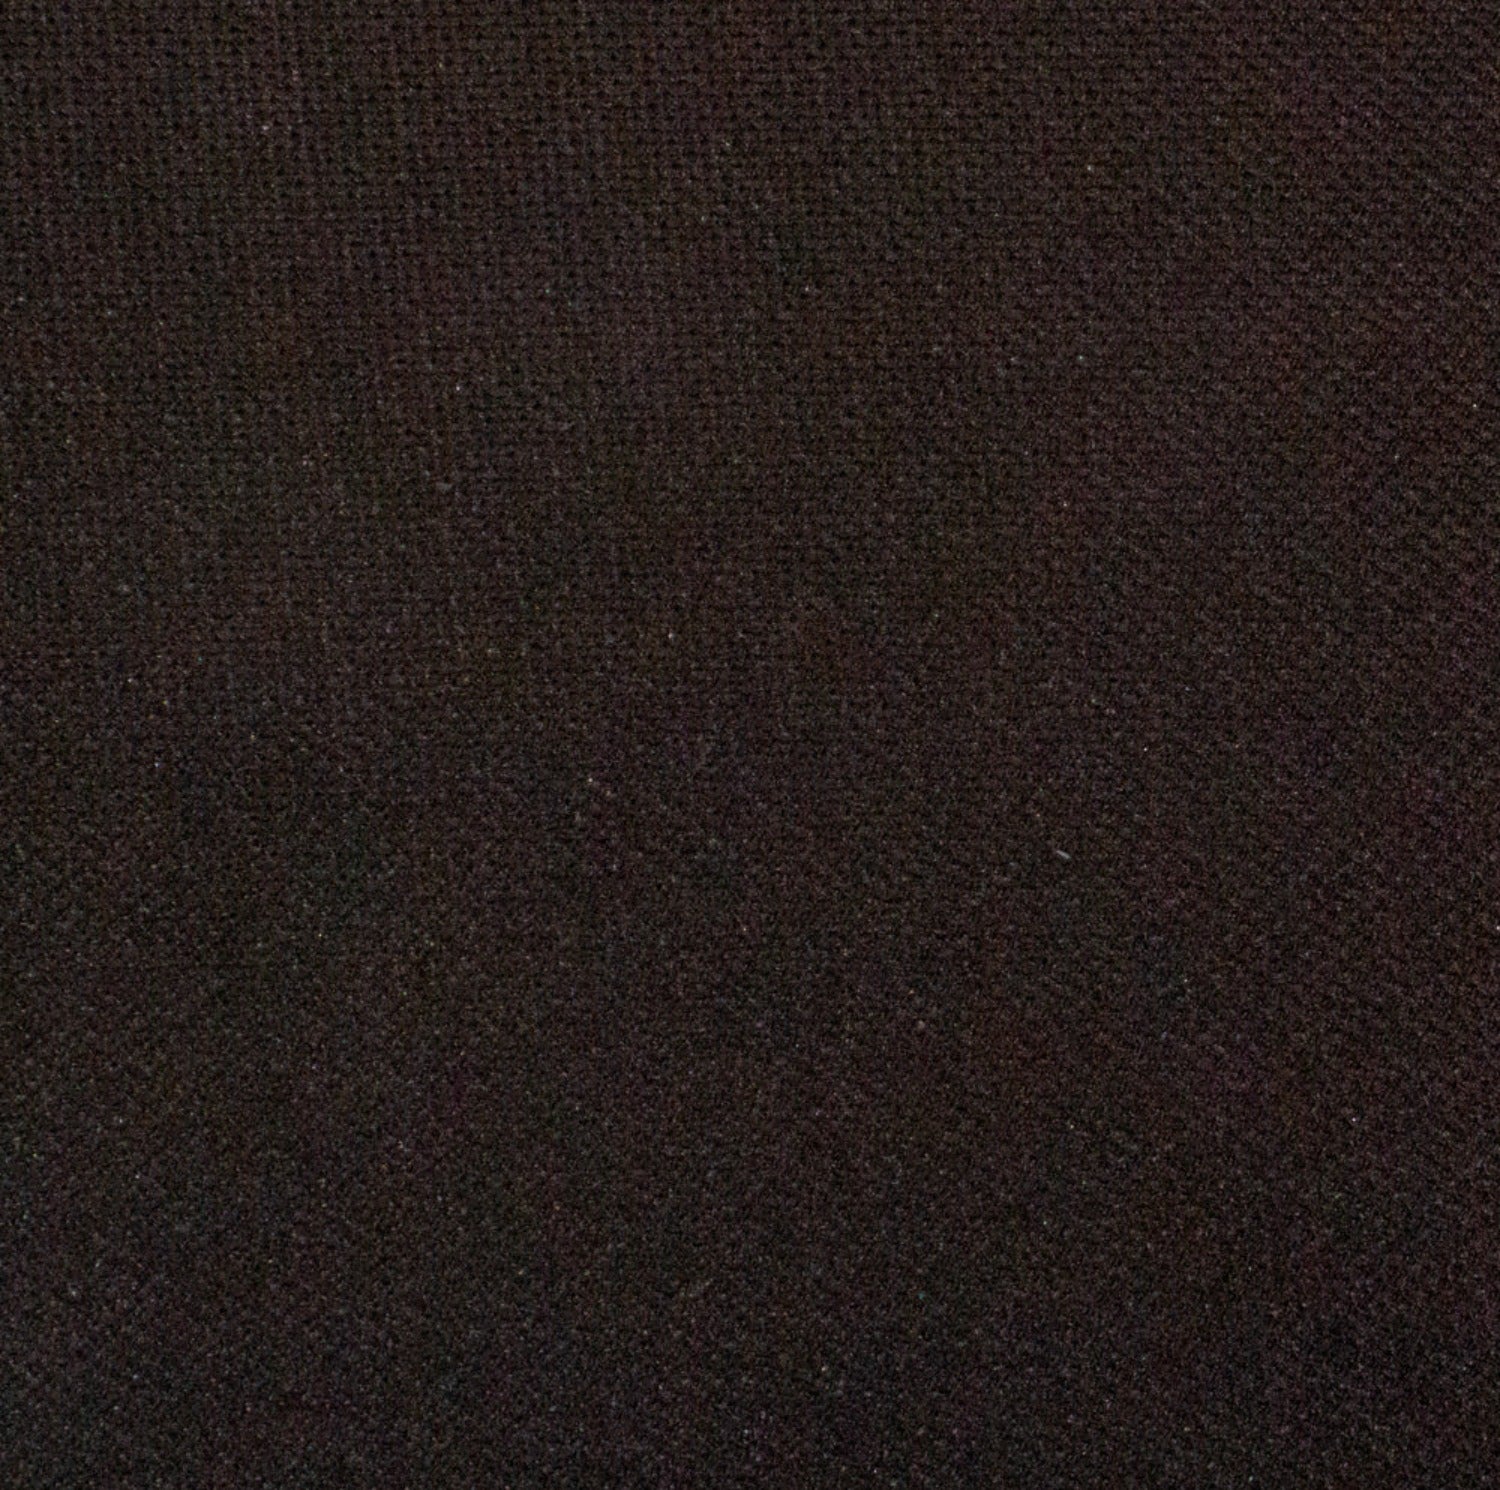 Flat Knit Charcoal Black